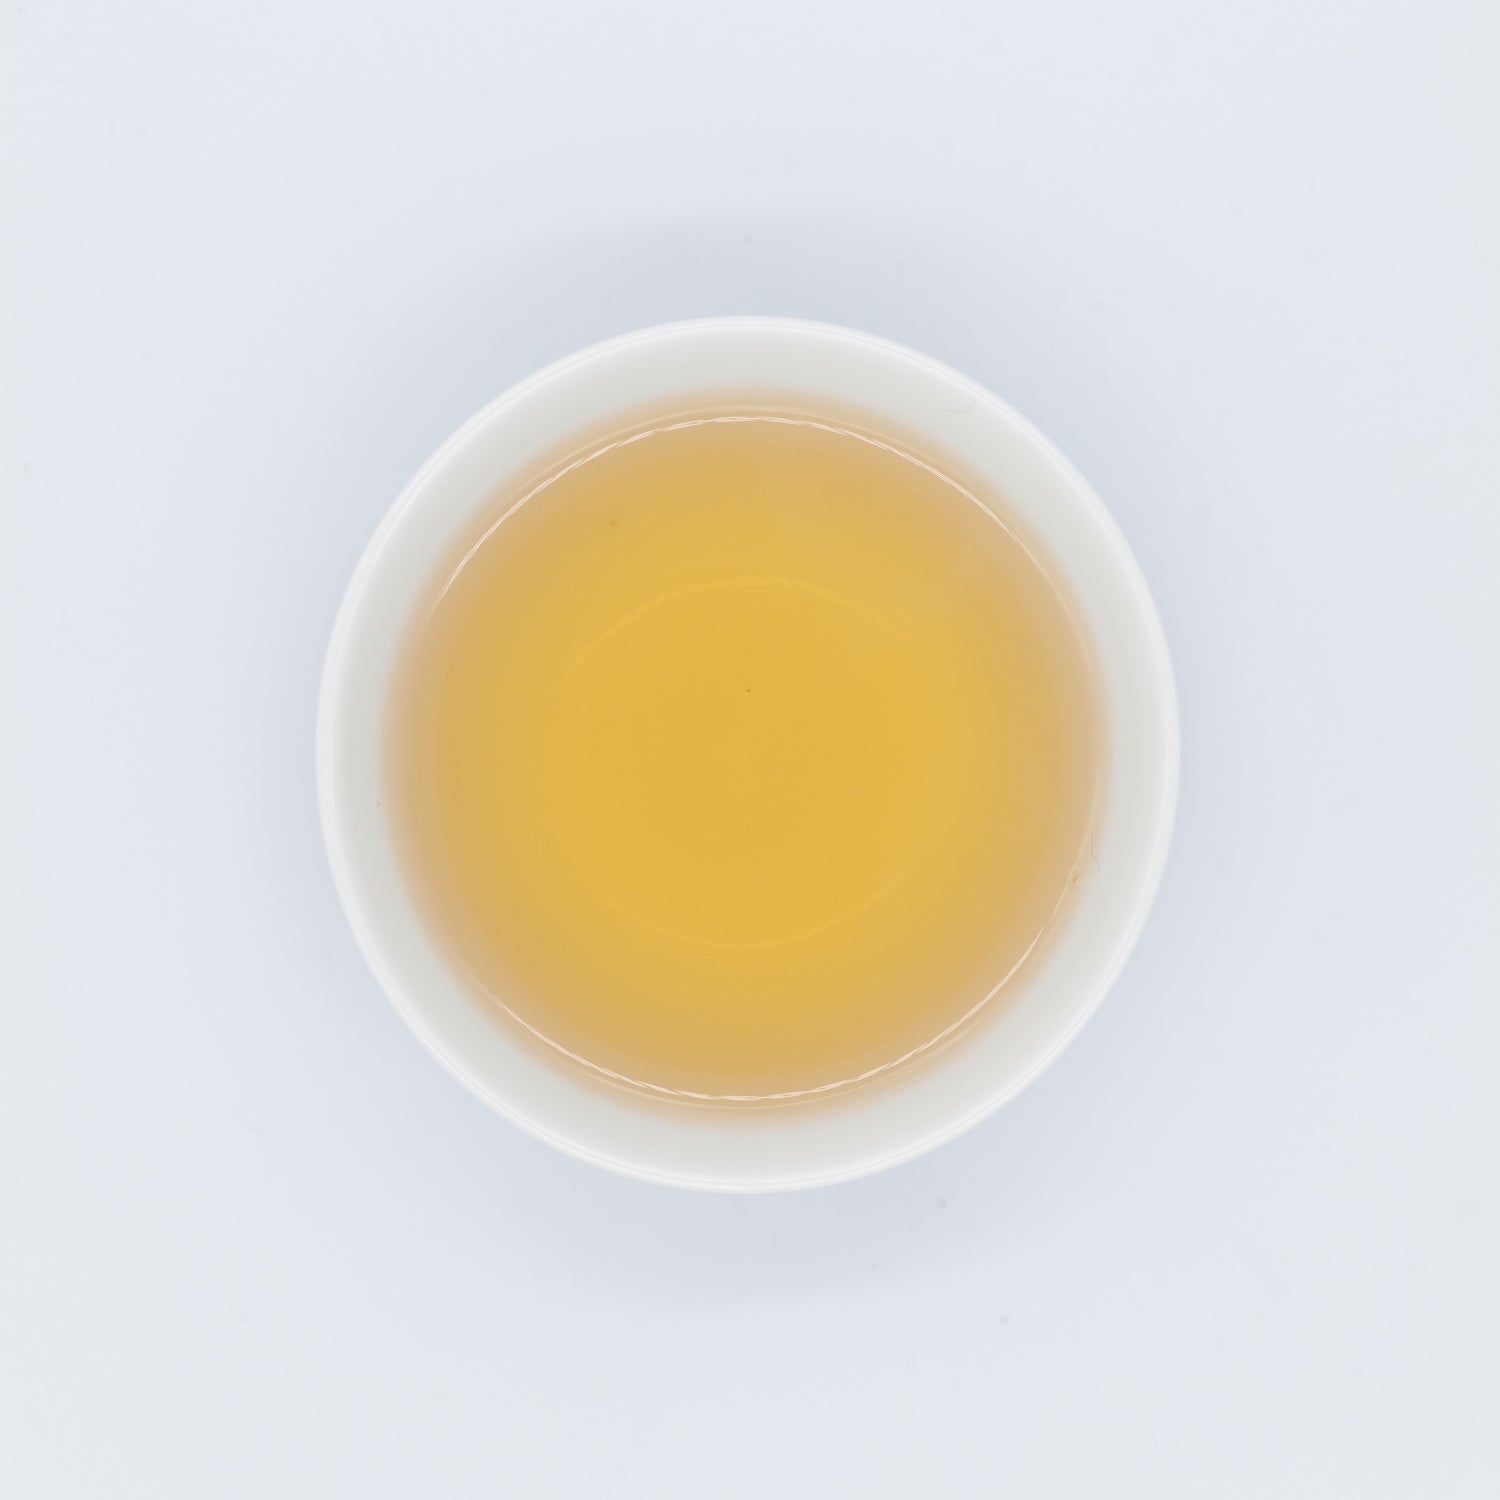 Izumi Black  from BROO - Craft Tea from Japan. Single-origin, small-batch, pesticide-free tea grown in Yame, Fukuoka. いずみ紅茶